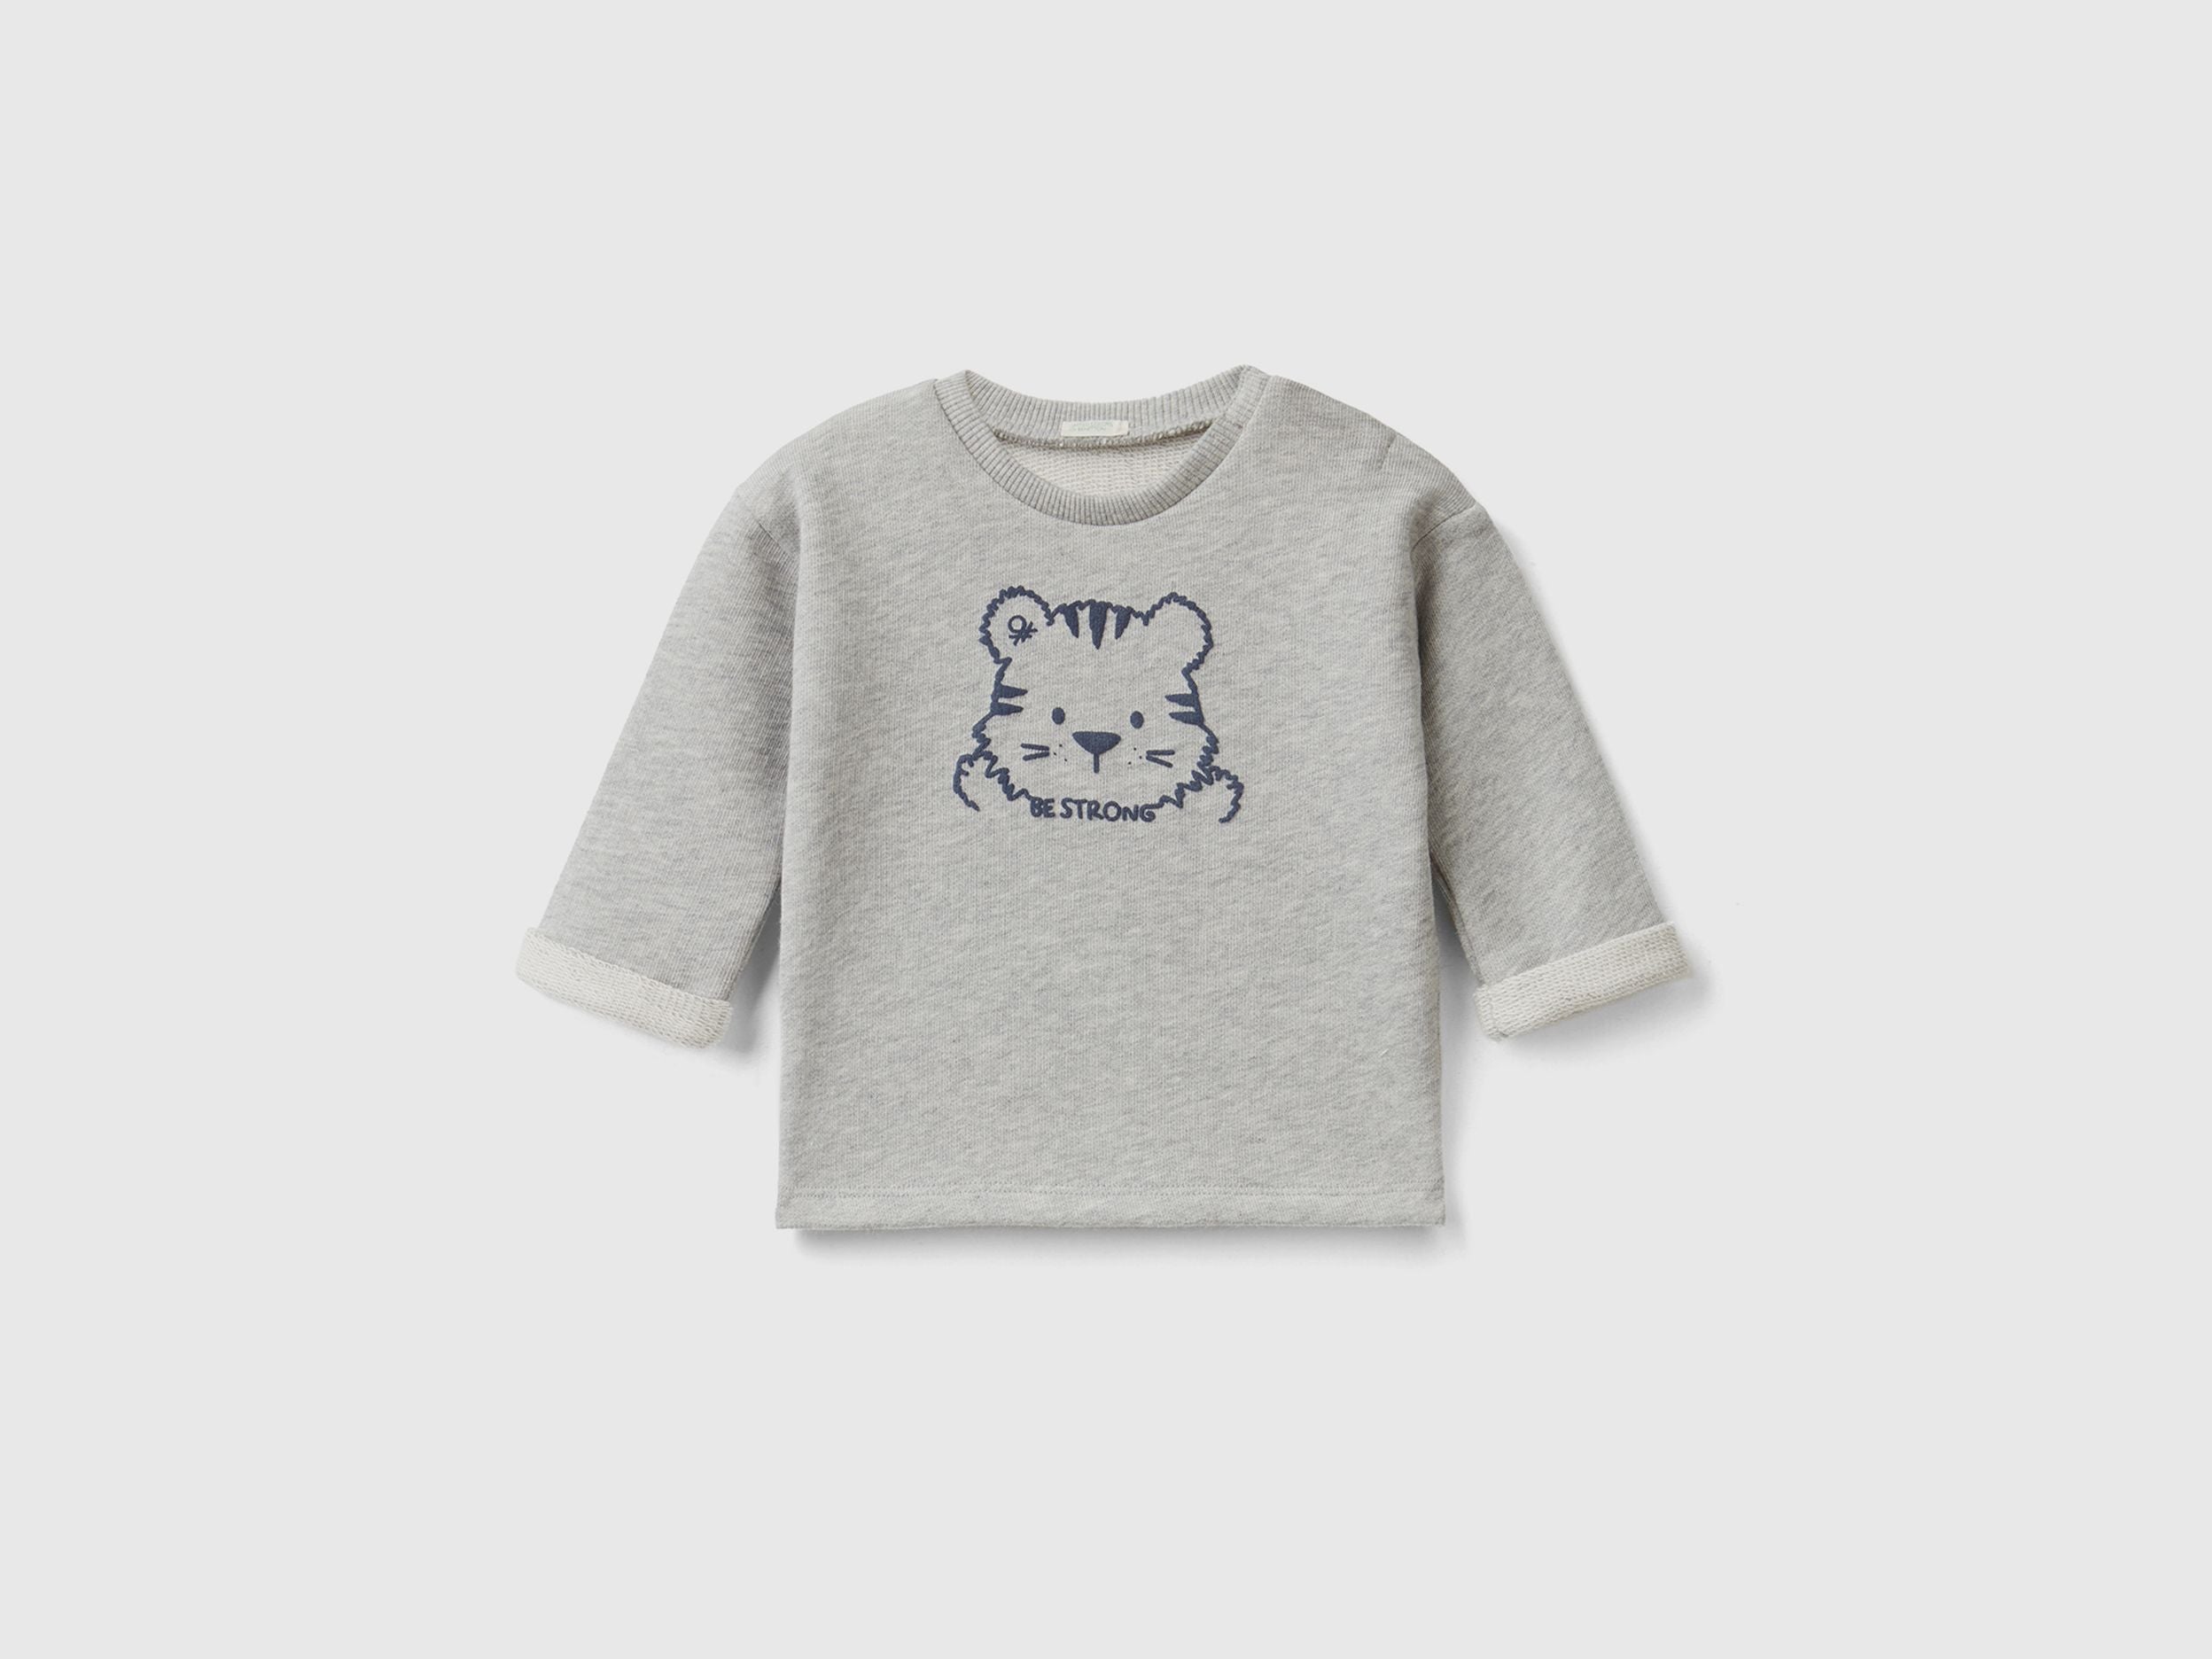 Soft sweatshirt in organic cotton with print